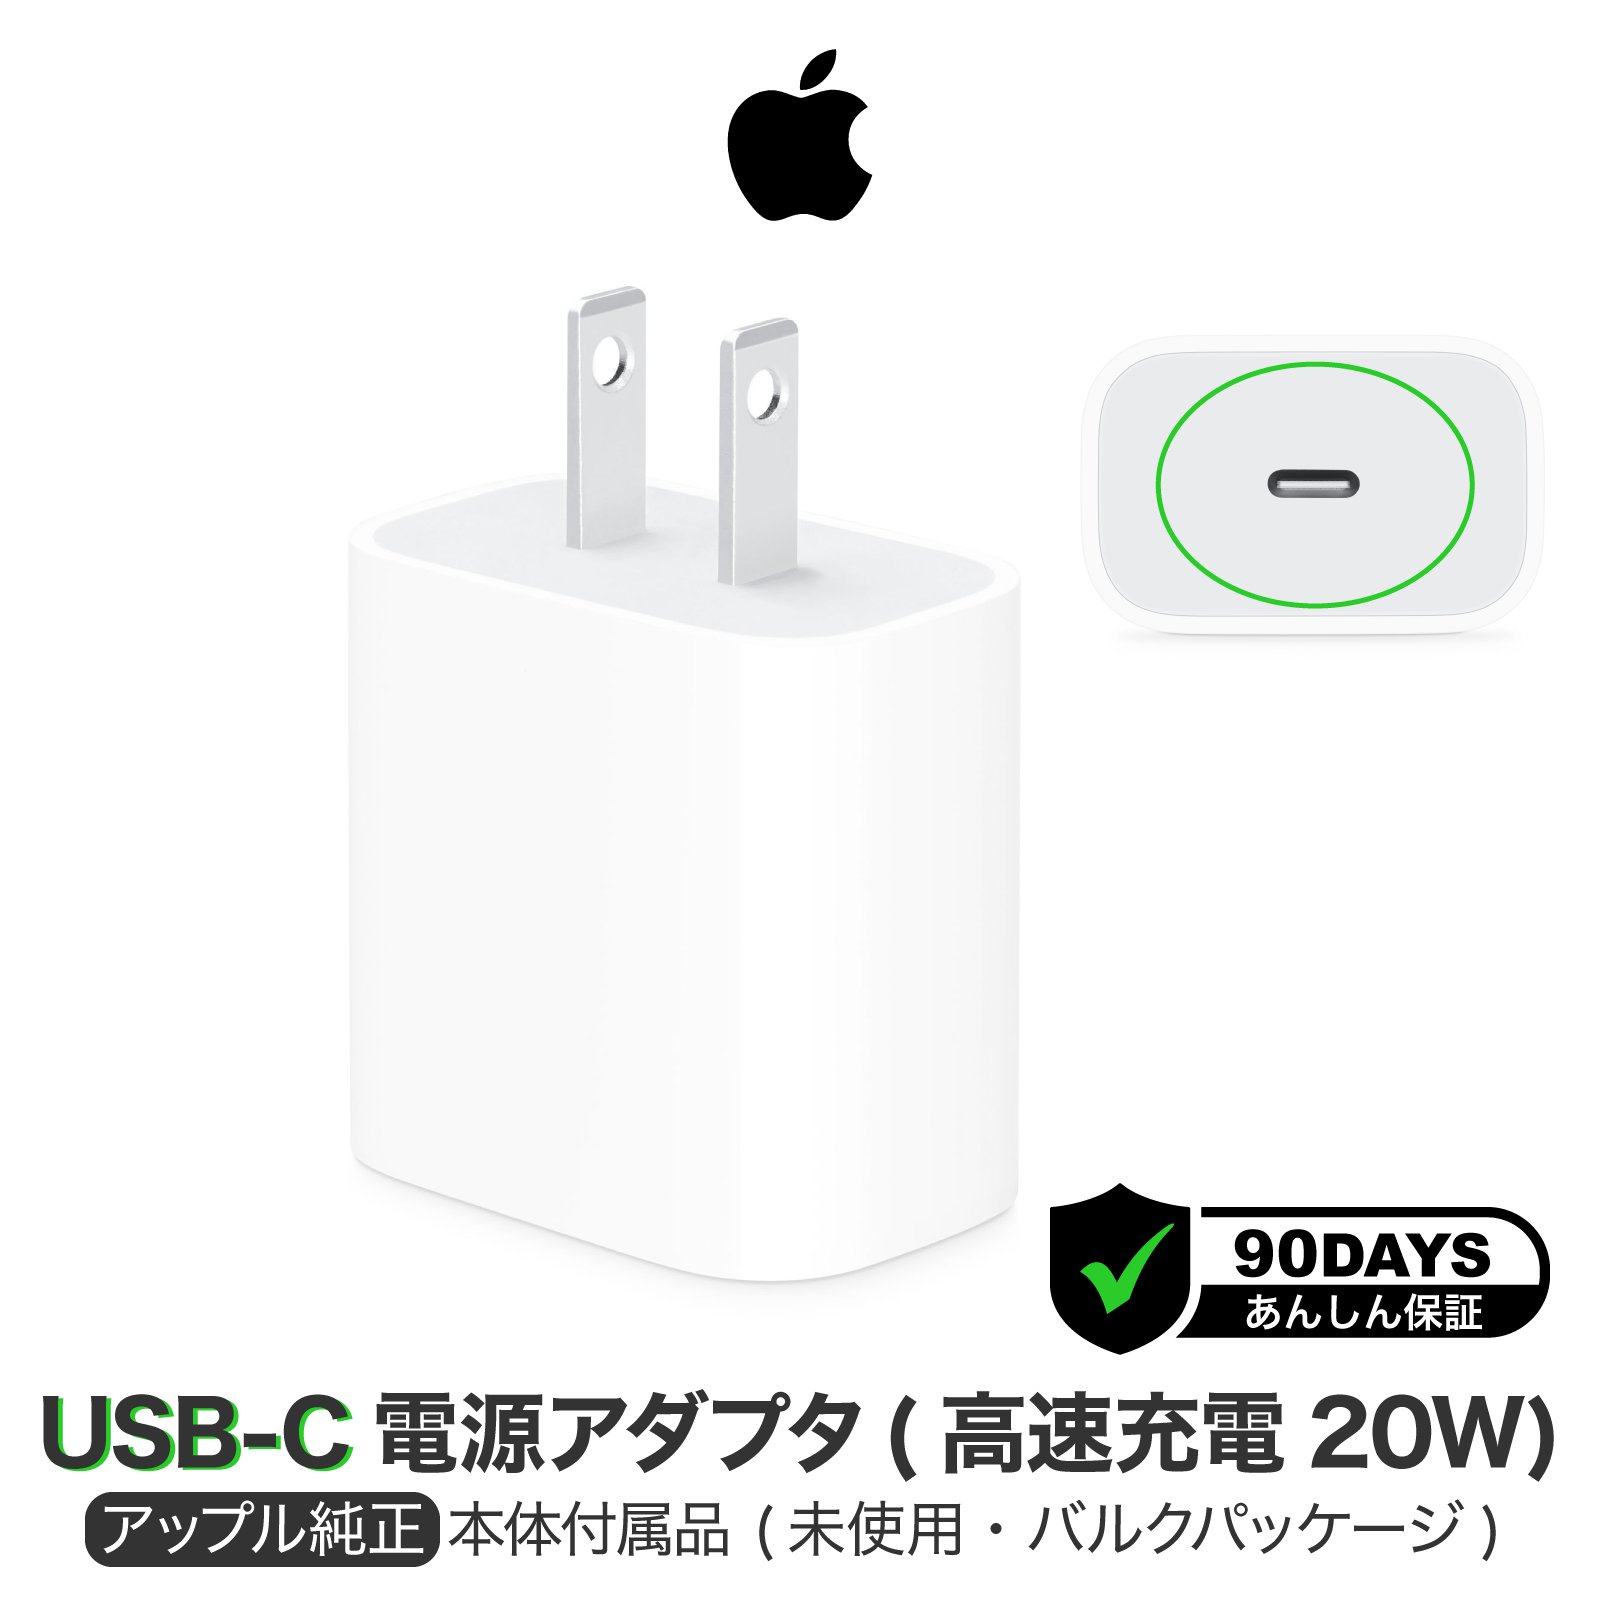 Apple 純正 20W USB-C 電源アダプタ PD 急速充電 iPhone iPod 充電器 